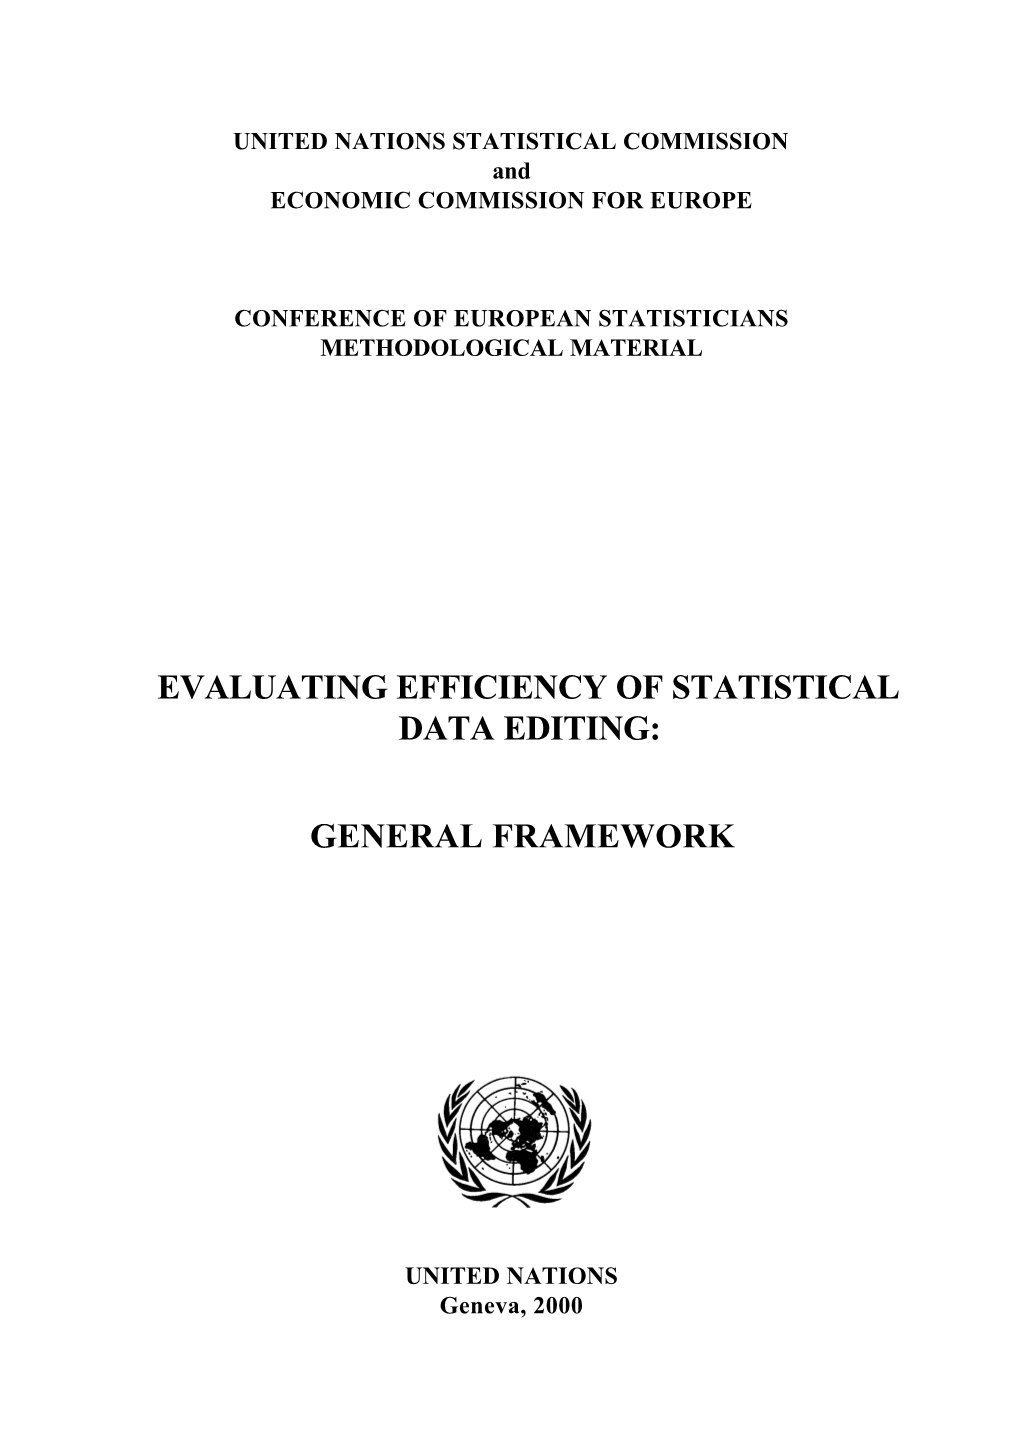 Evaluating Efficiency of Statistical Data Editing